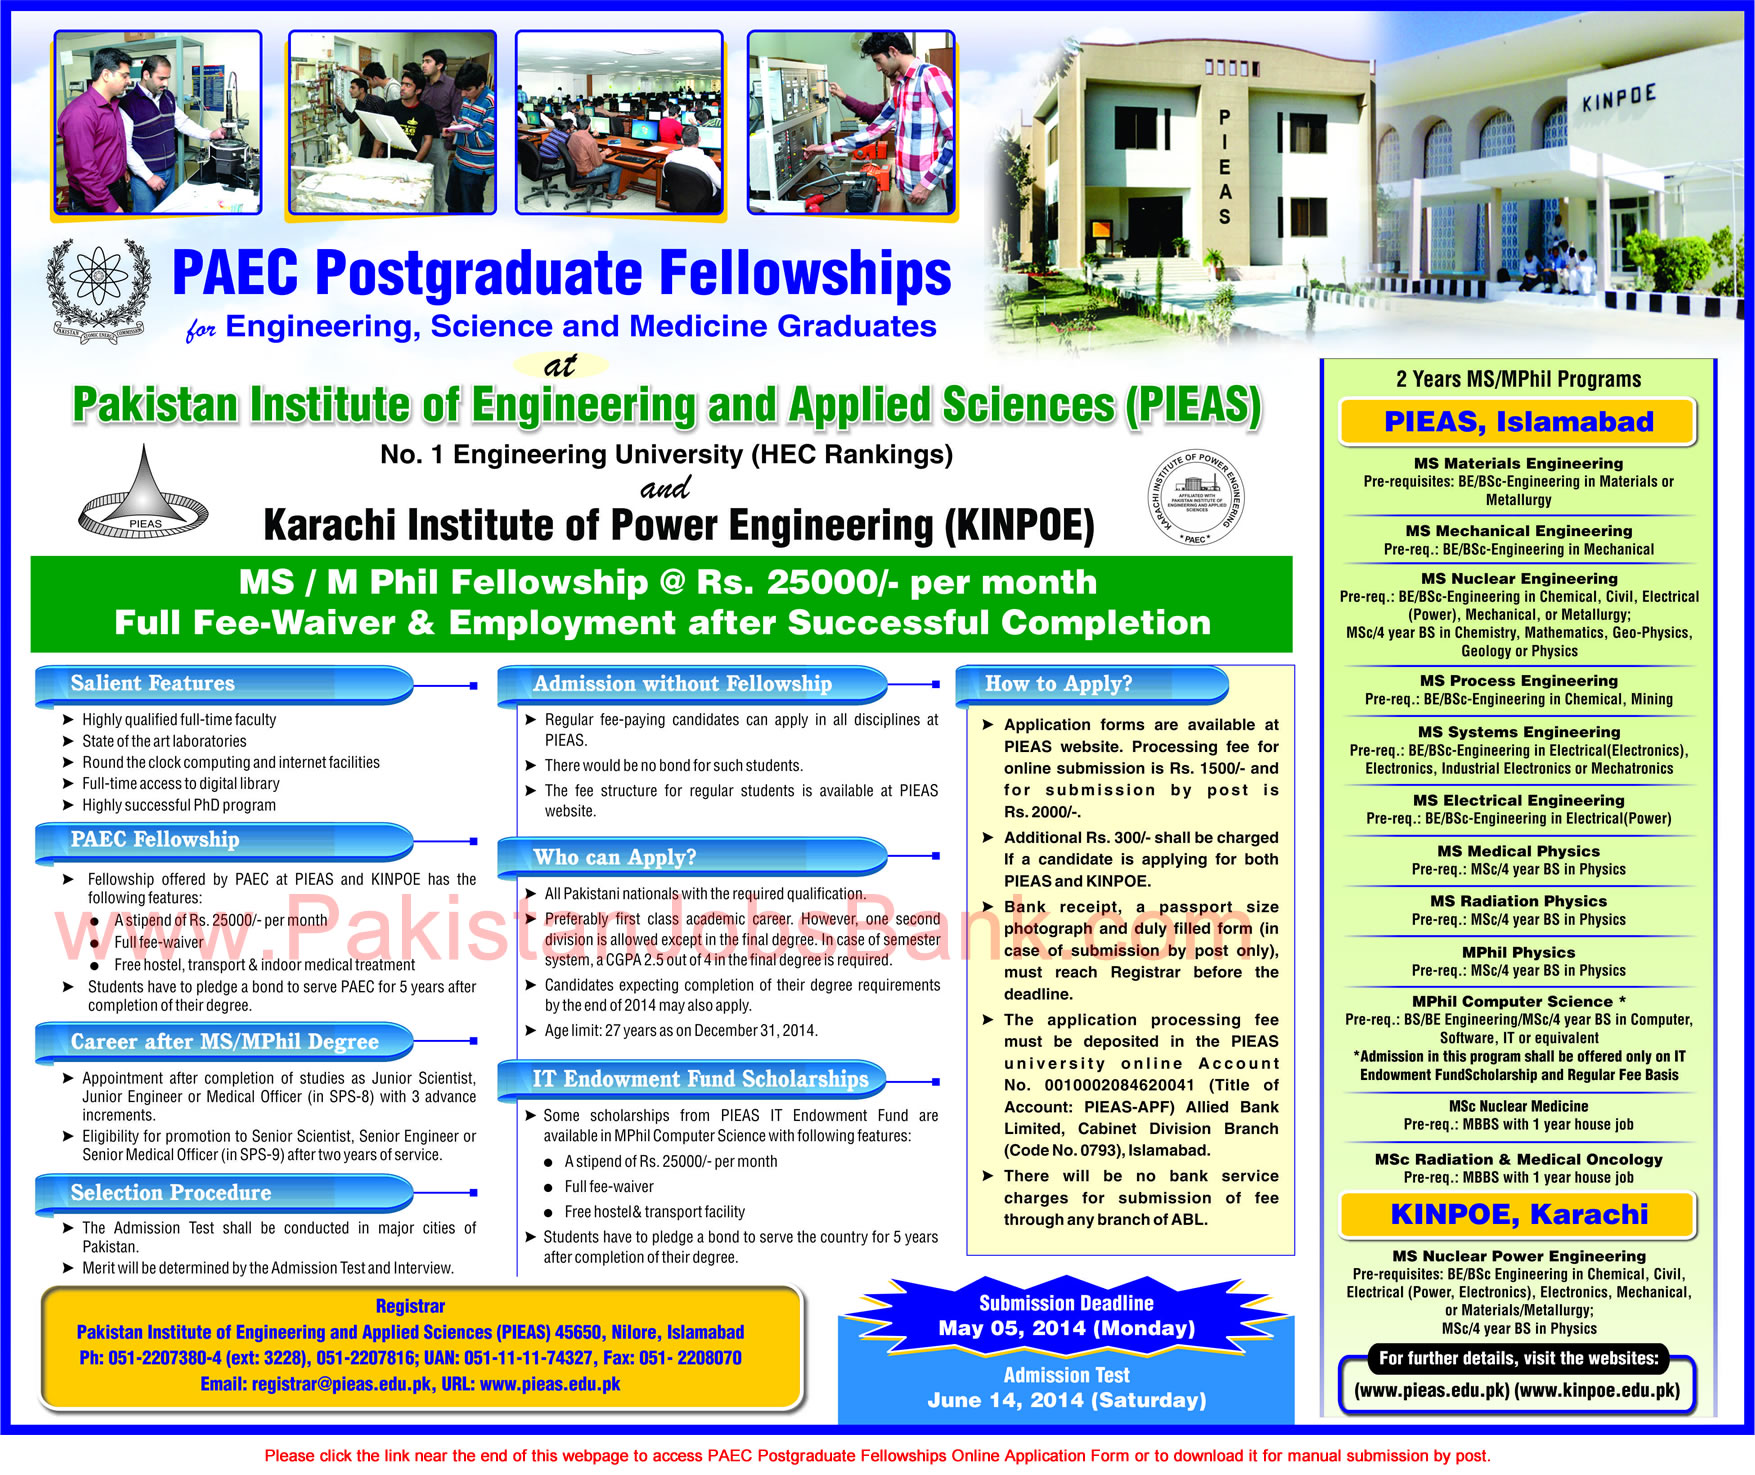 PAEC Fellowships 2014 Postgraduate at PIEAS & KINPOE